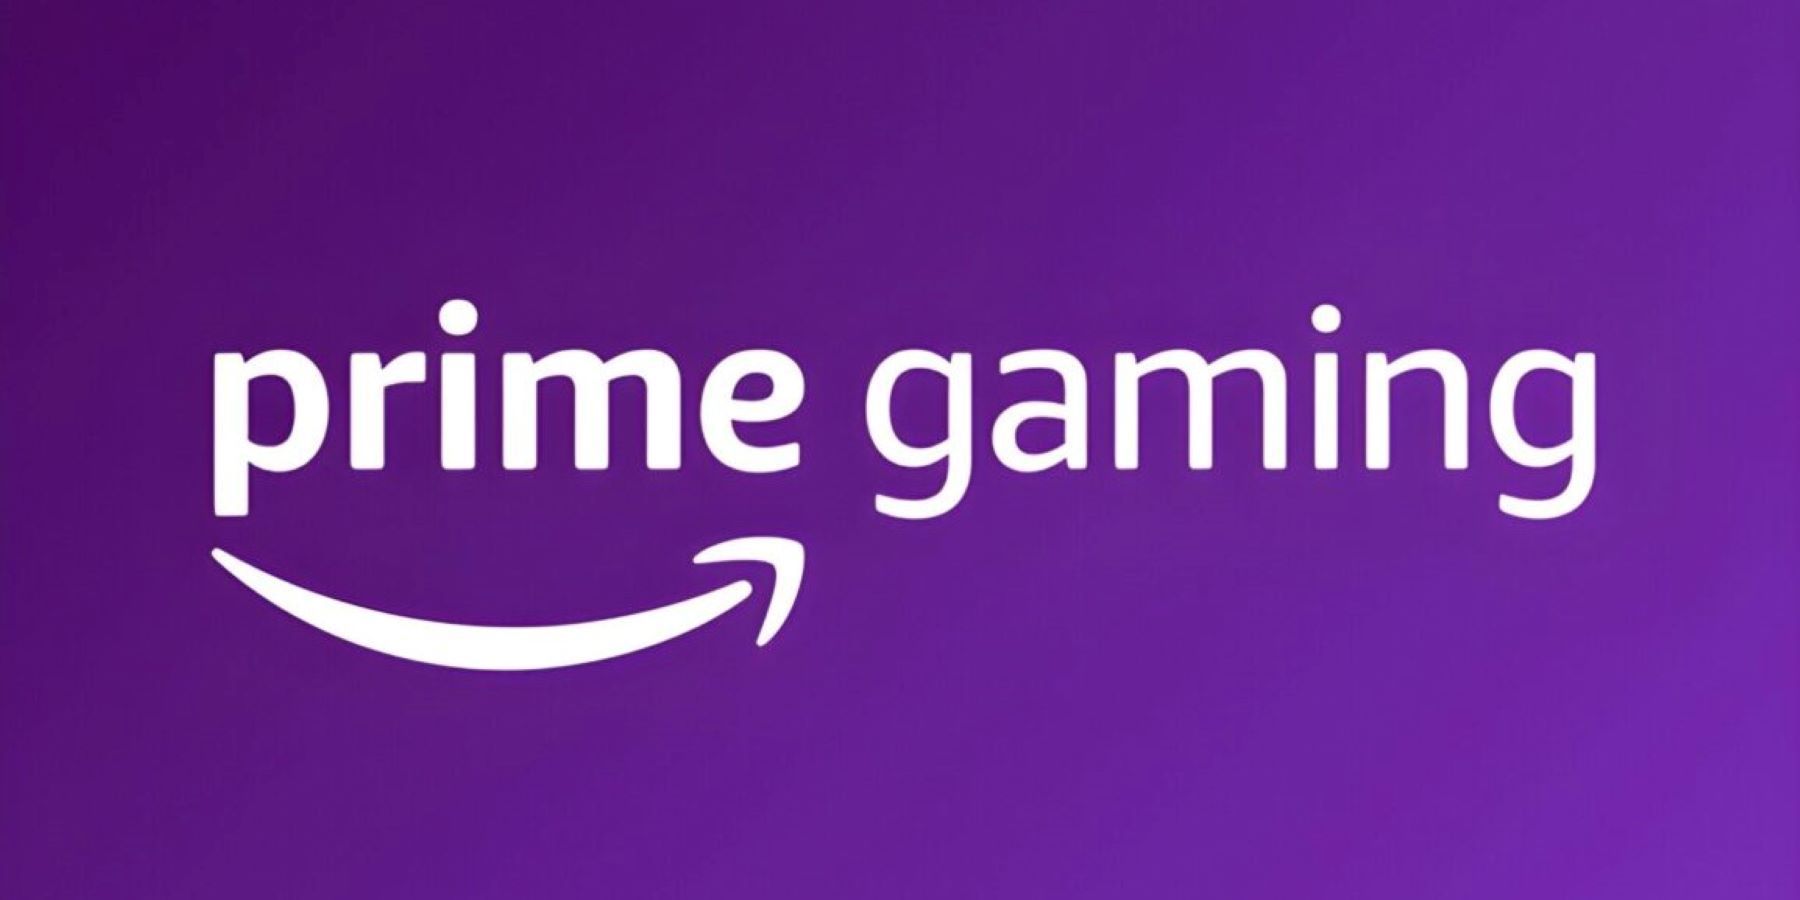 Amazon Prime Gaming logo